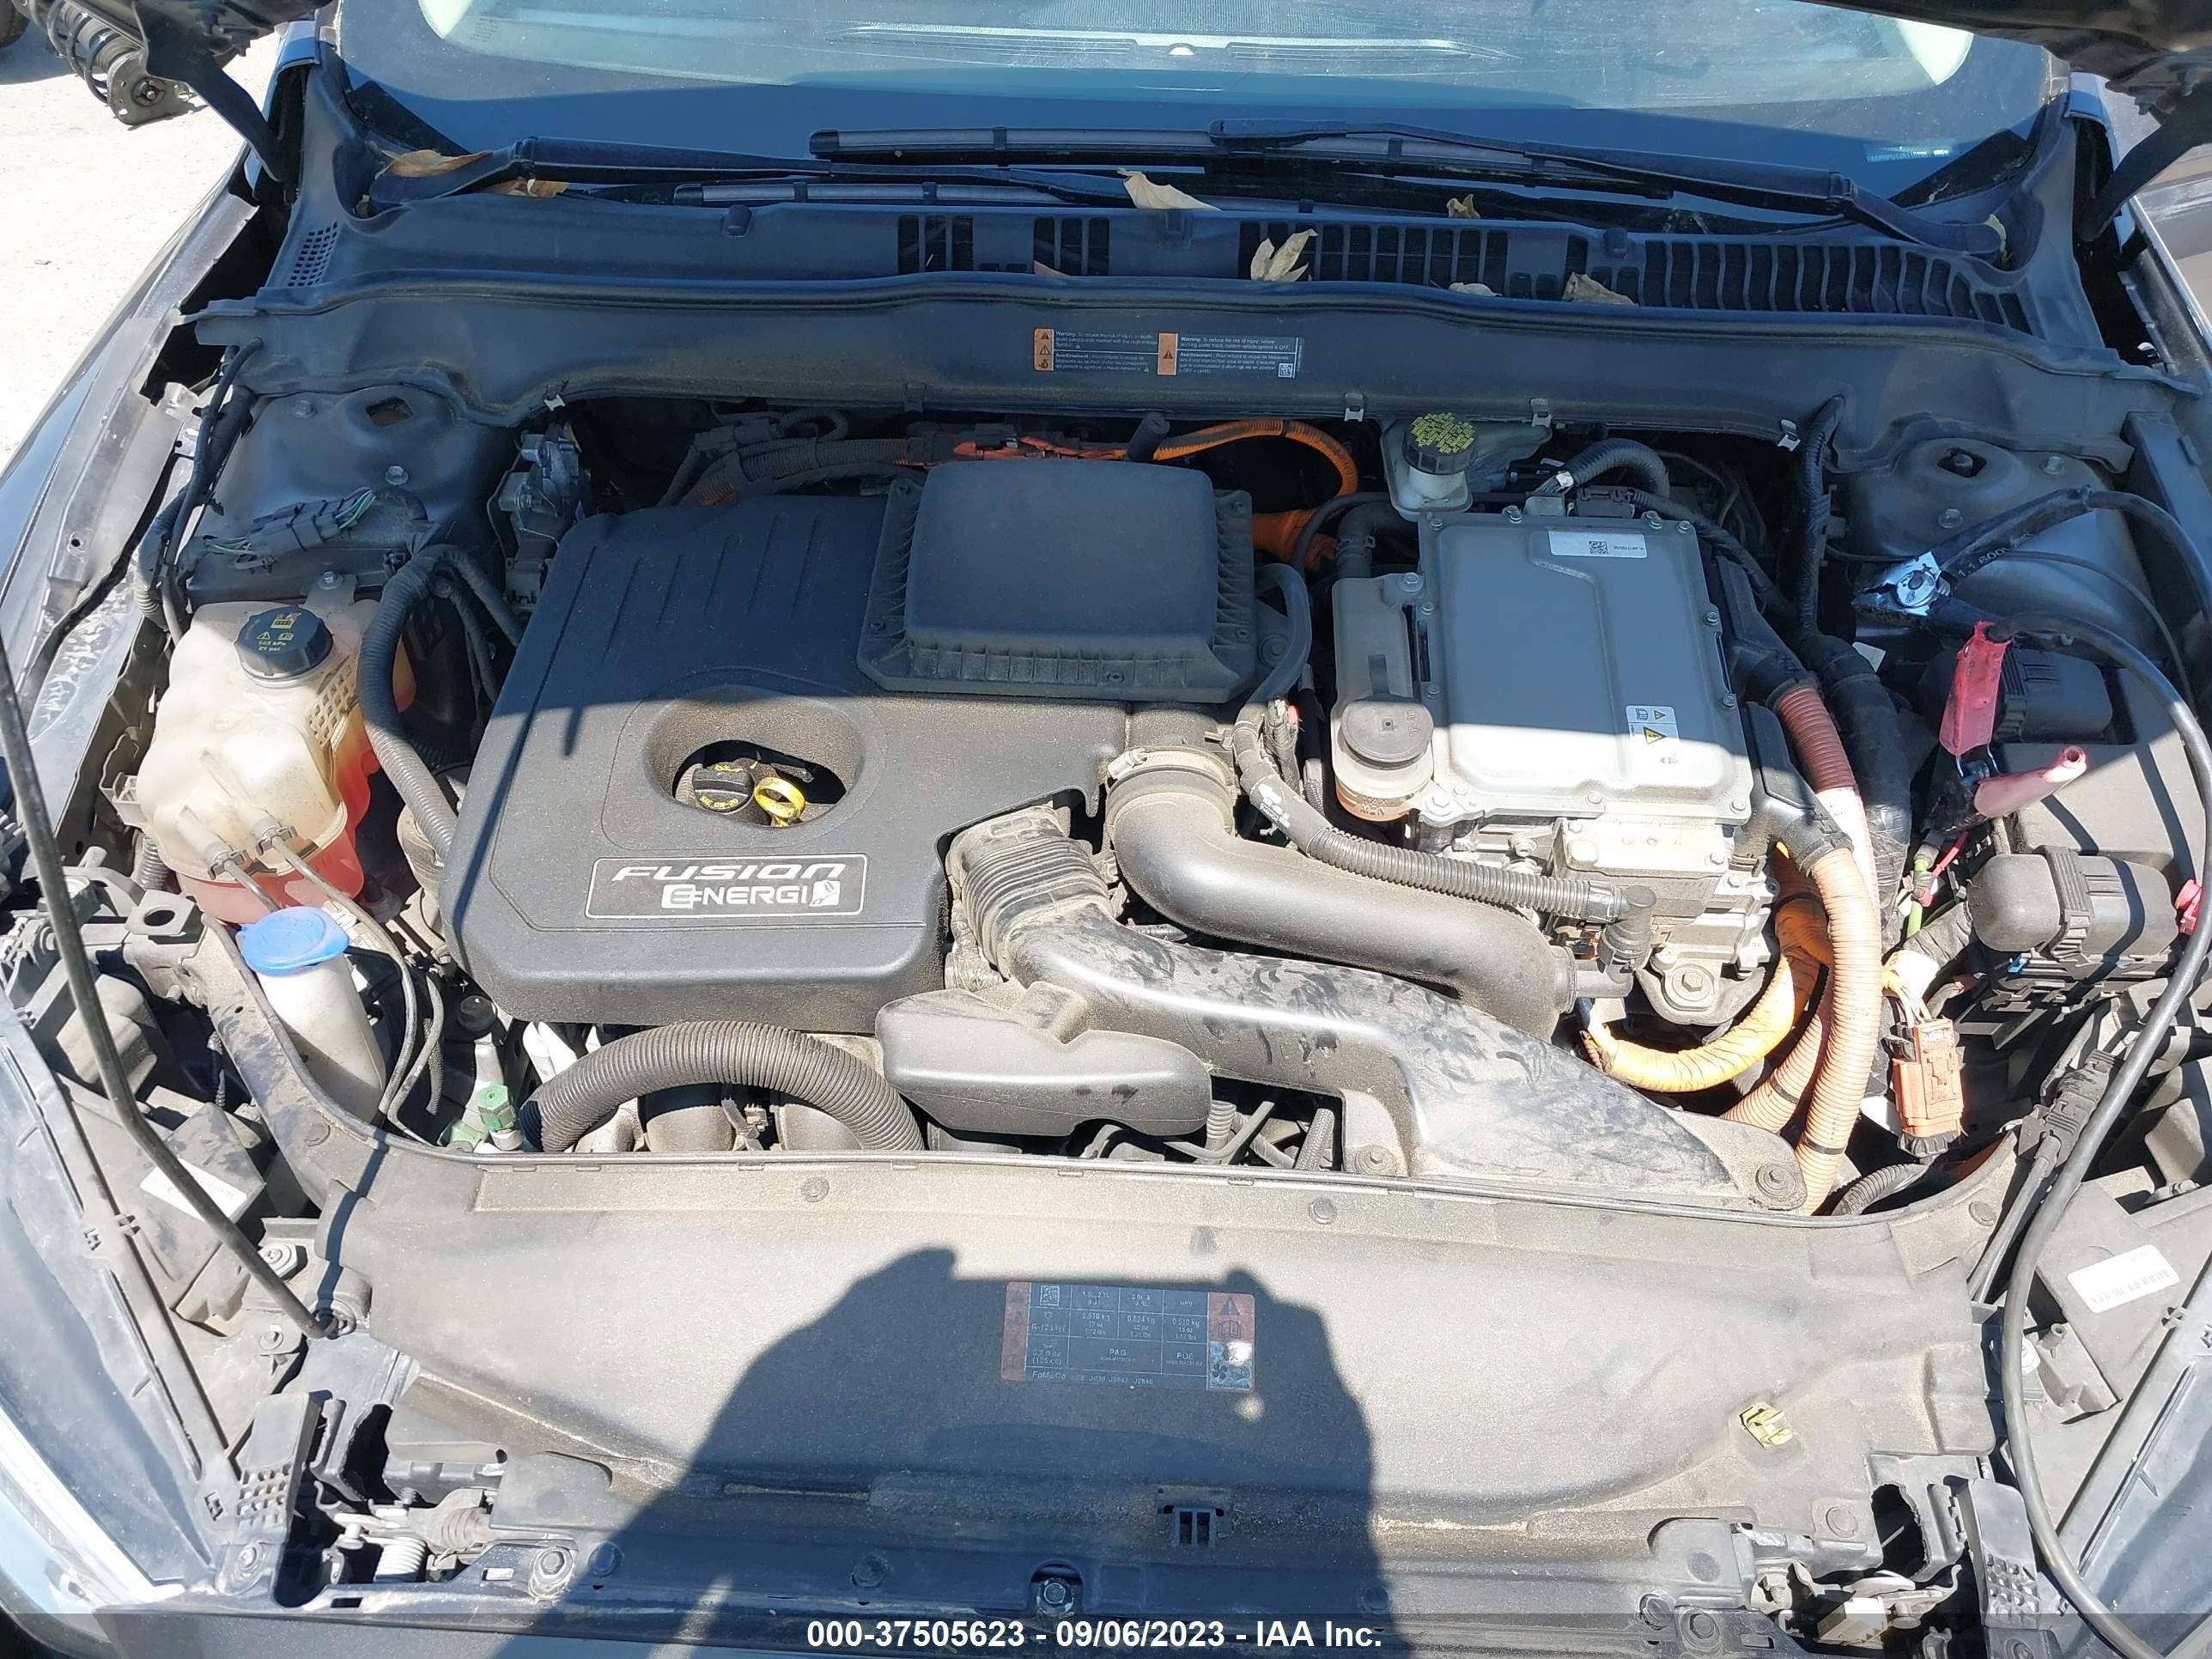 2018 Ford Fusion Energi Se vin: 3FA6P0PU1JR110285